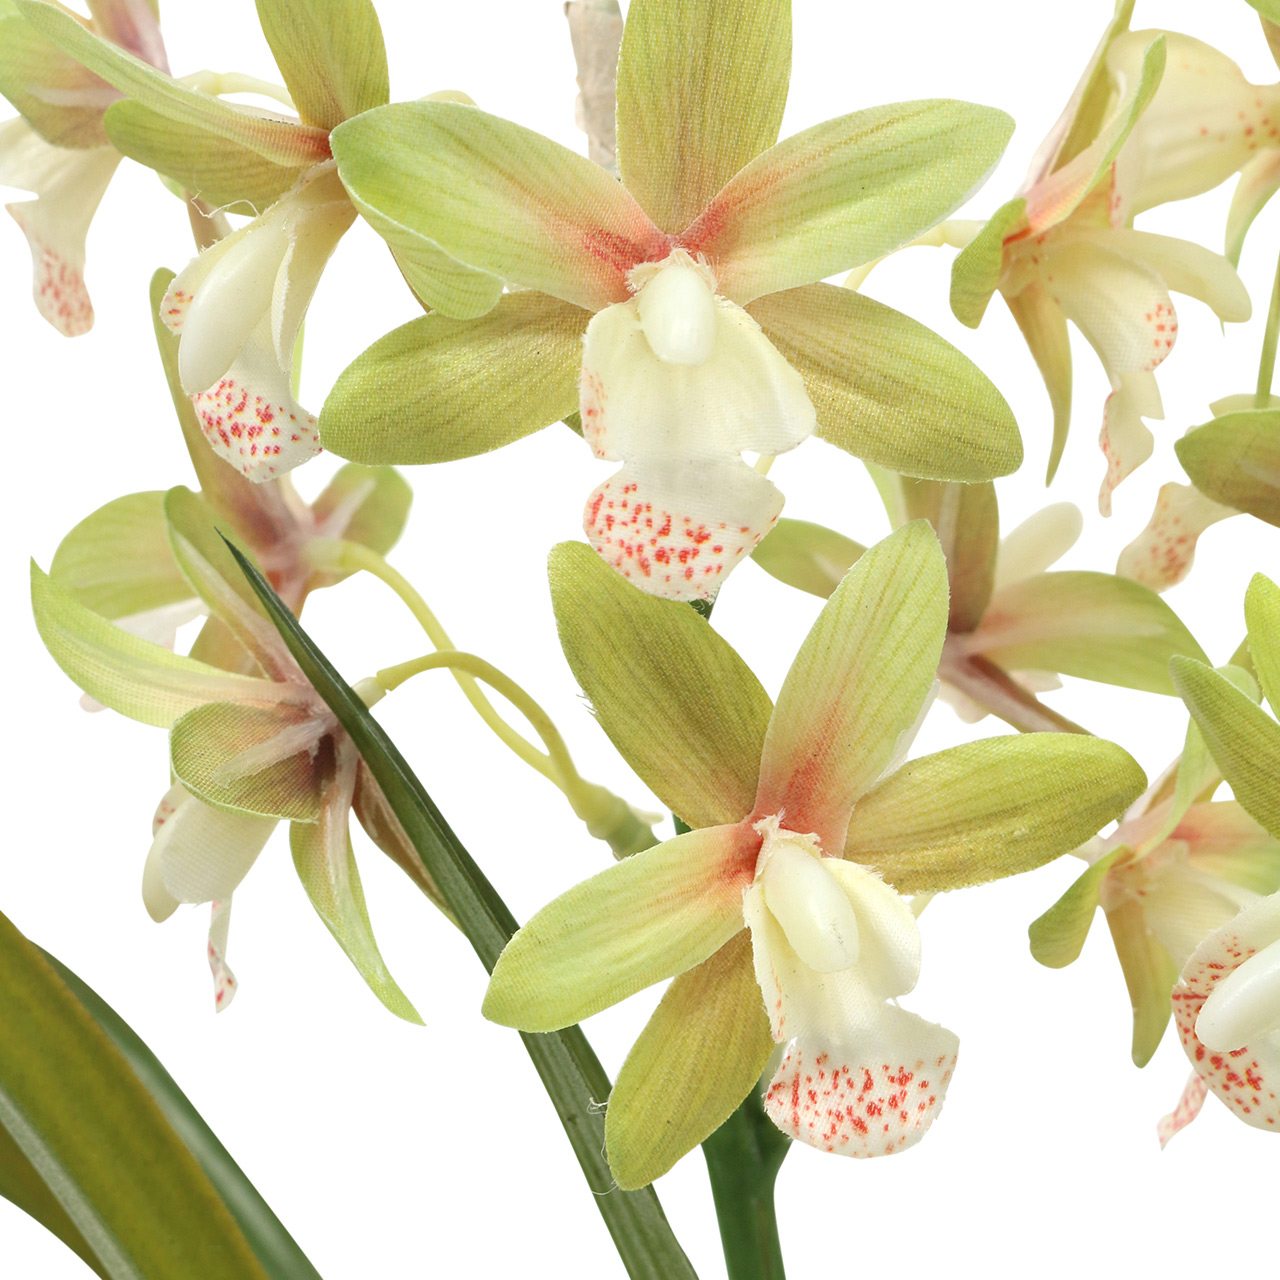 2er Set LED Orchidee Blüten Standblume Tischdekoration Beleuchtung DxH 25x37 cm 